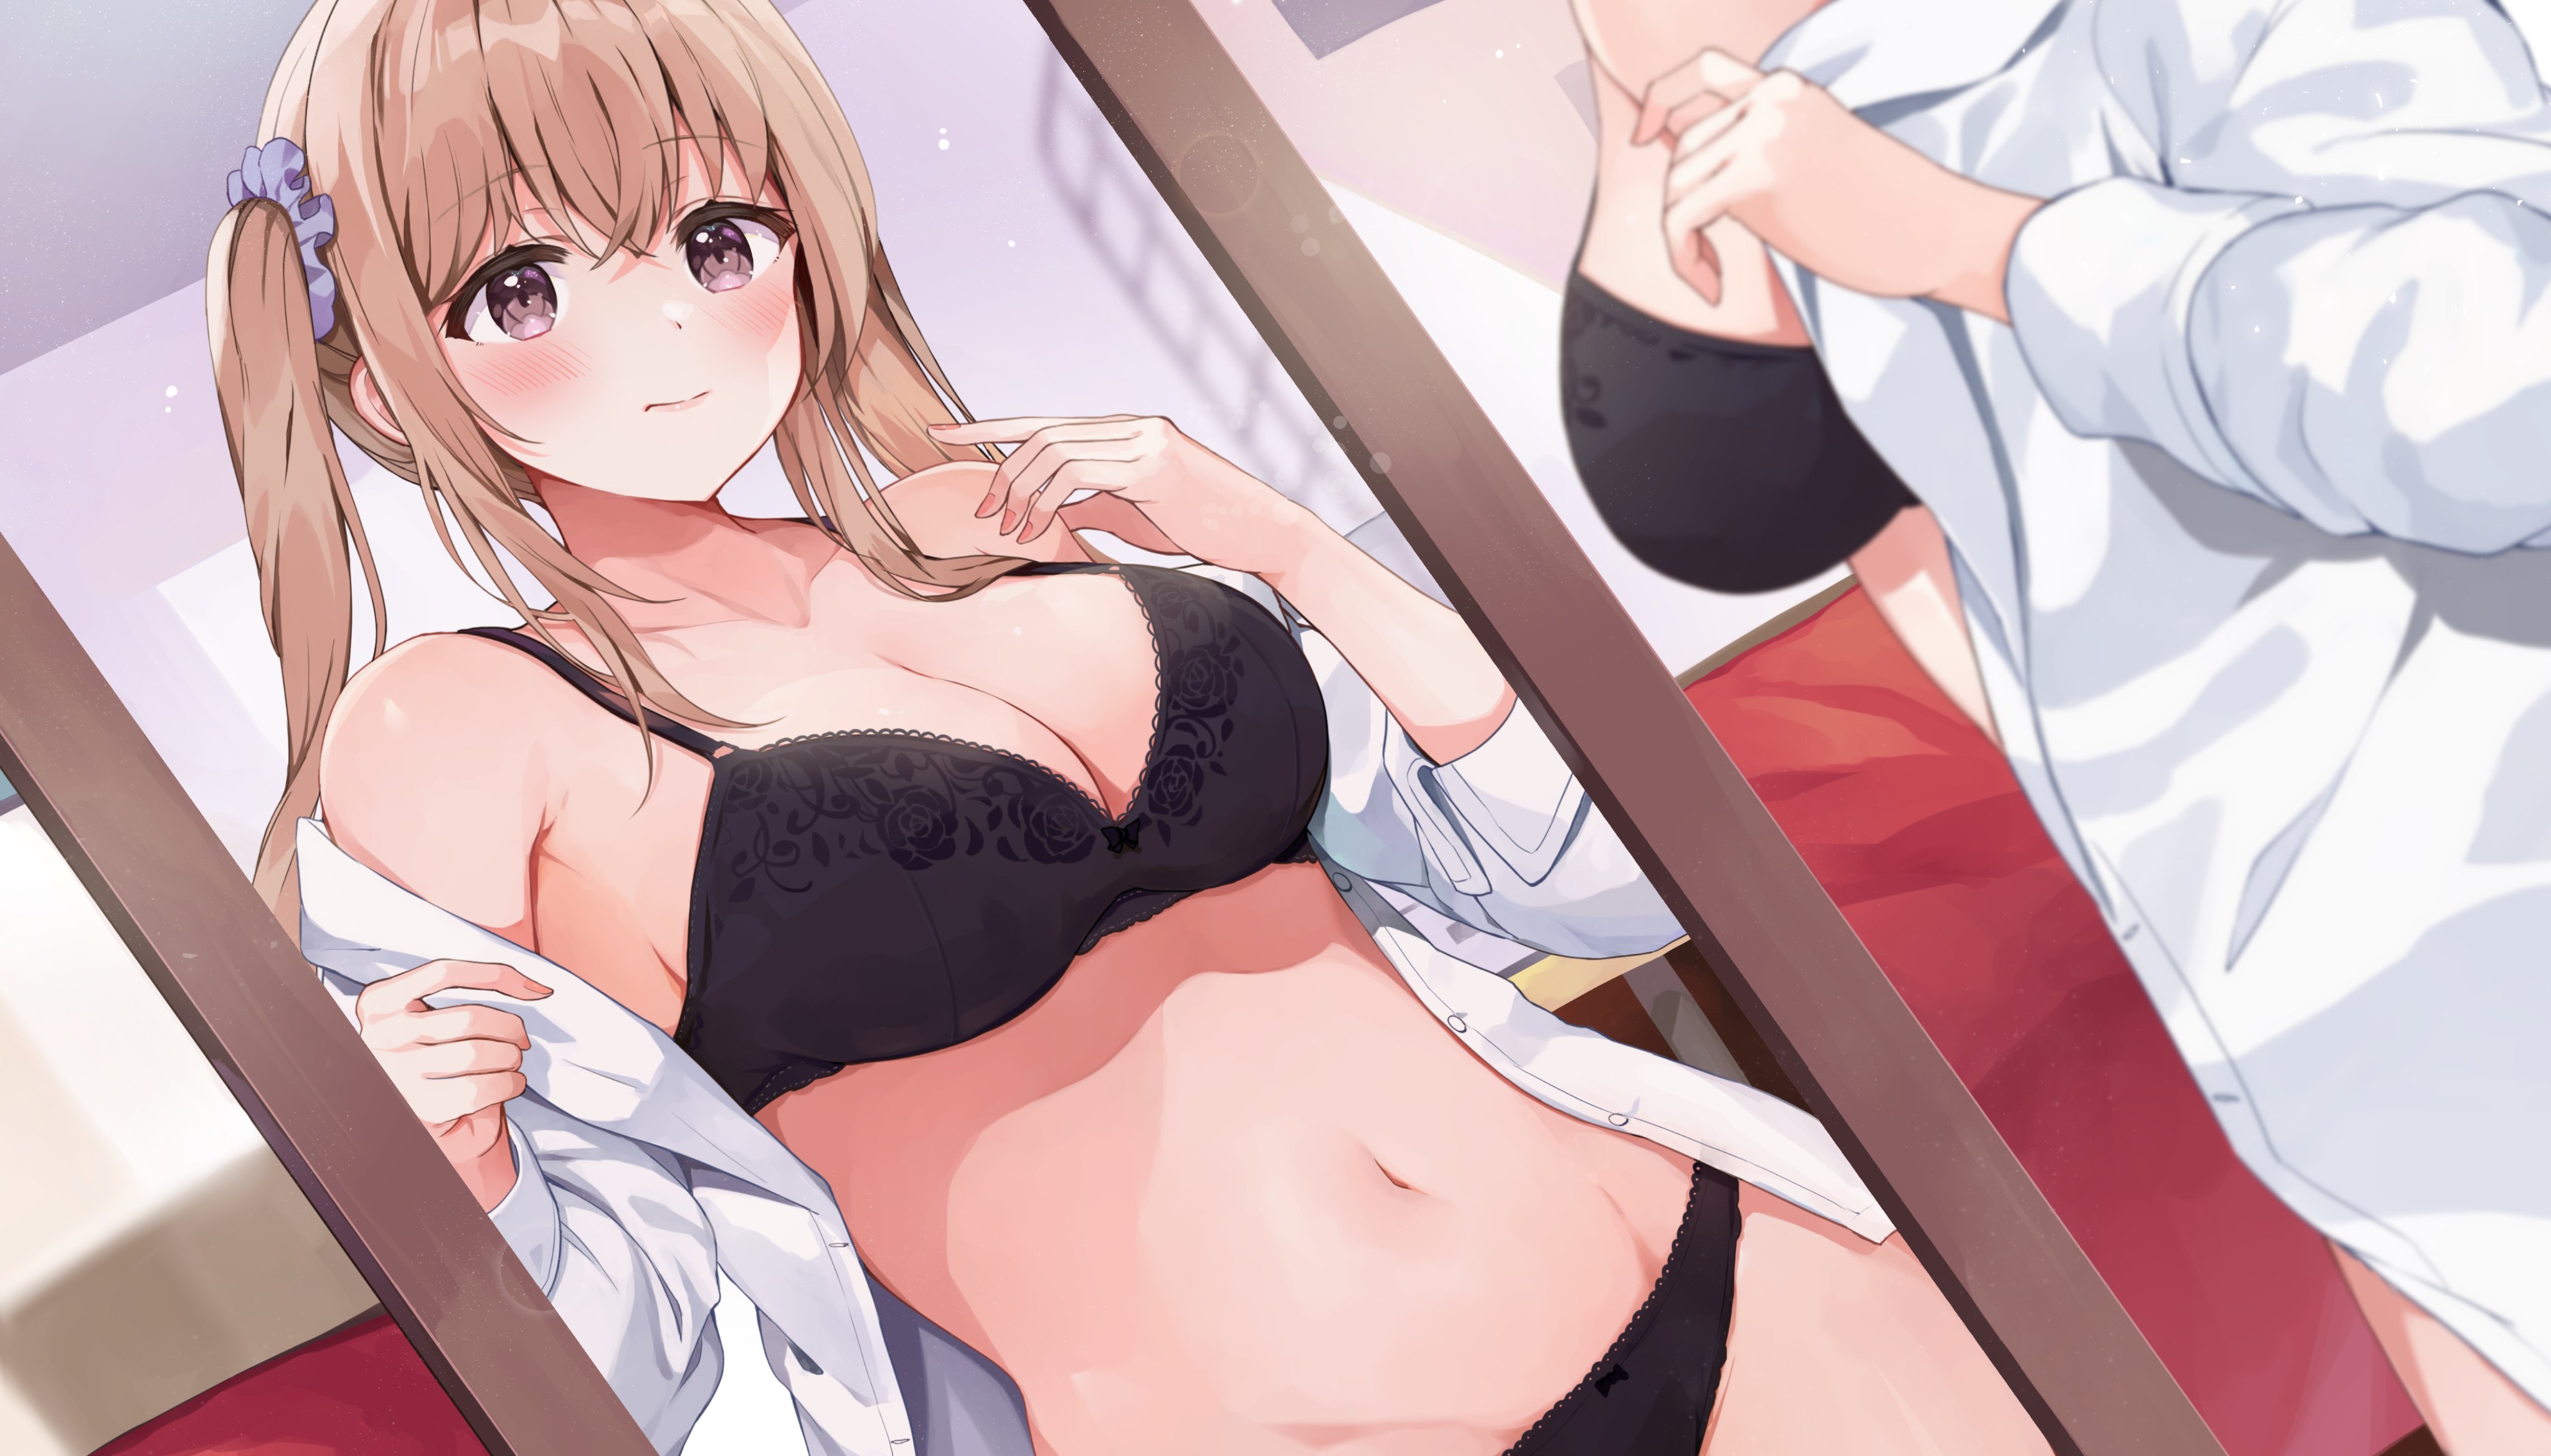 Anime 4096x2338 Racchi anime anime girls underwear bra panties belly brunette blush open shirt cleavage